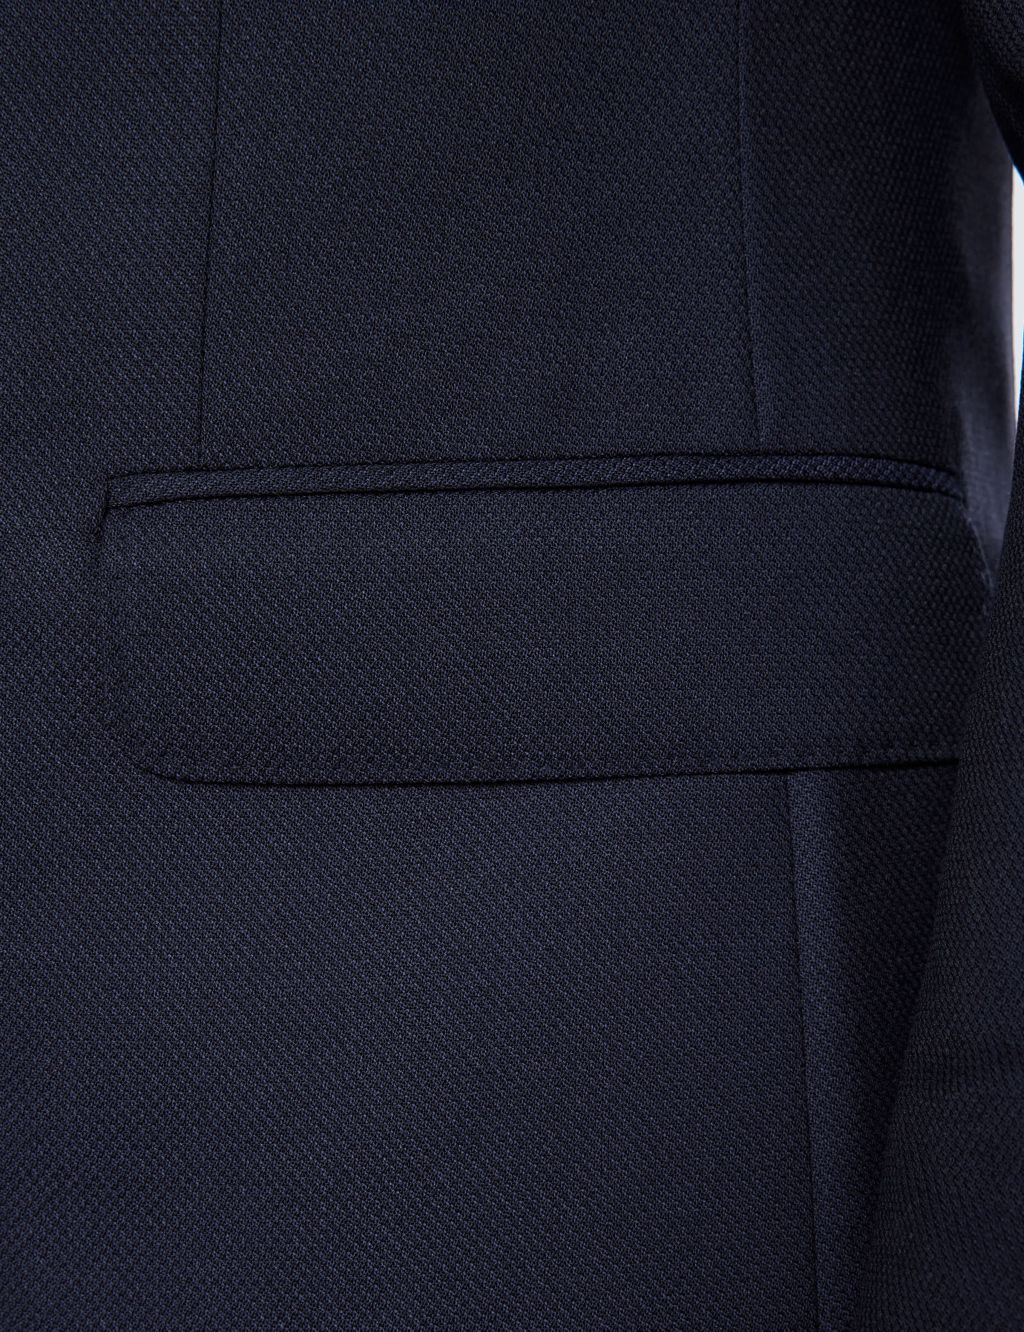 Slim Fit Pure Wool Textured Suit Jacket image 5